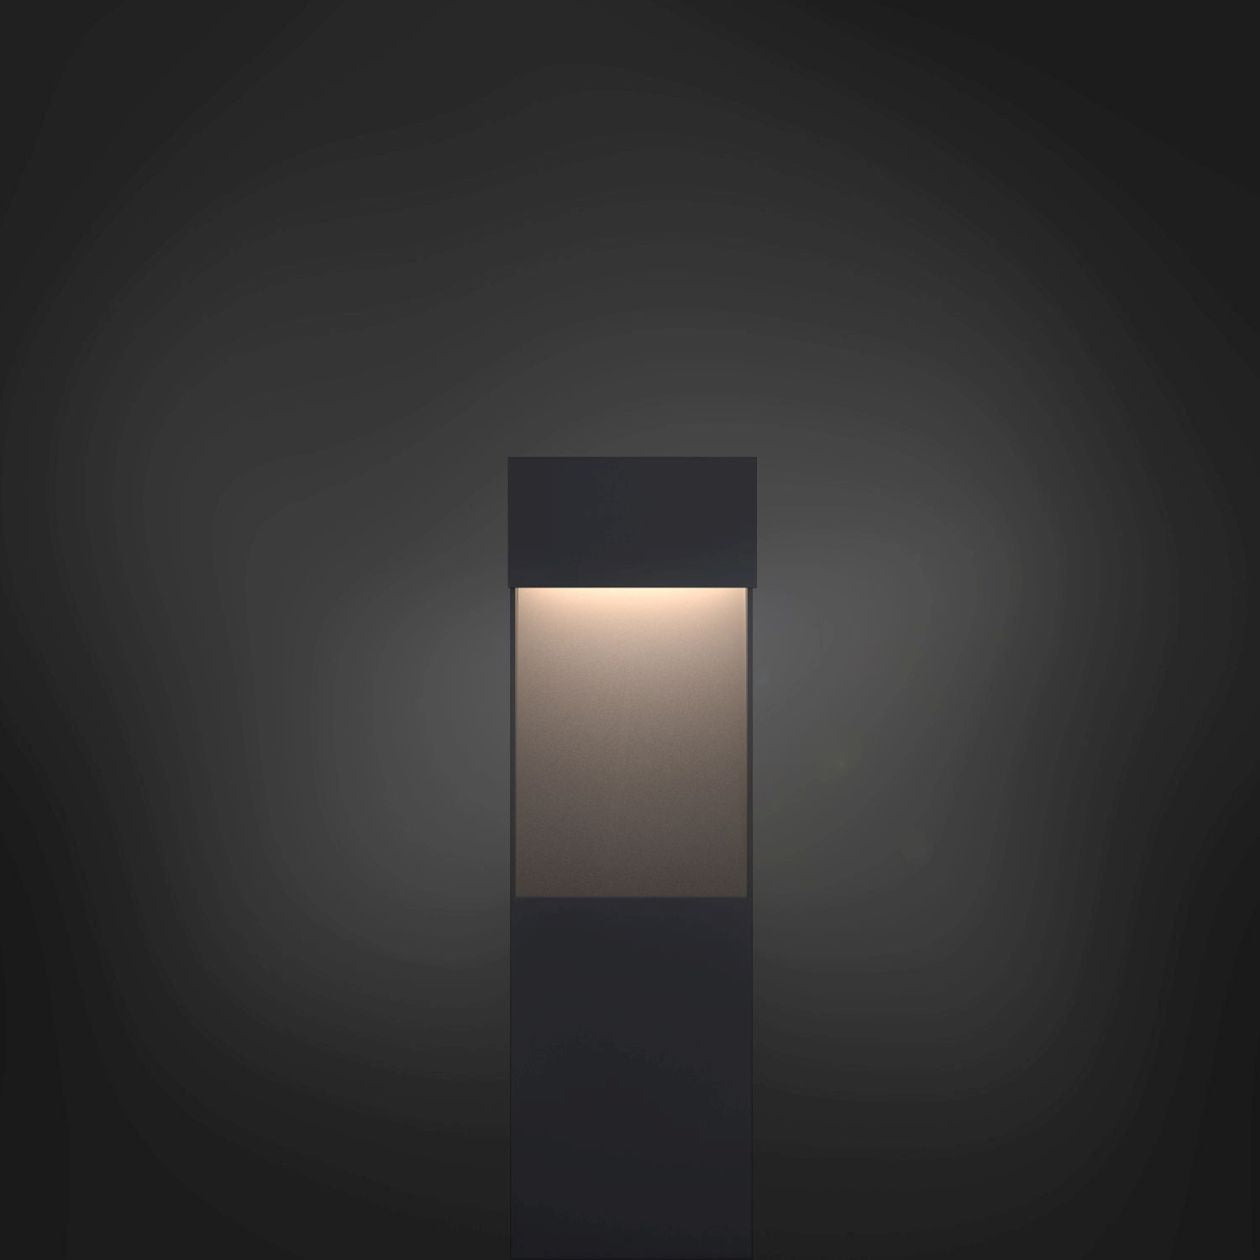 NANO BLOC - Contemporary, designer exterior path light in high durability colors